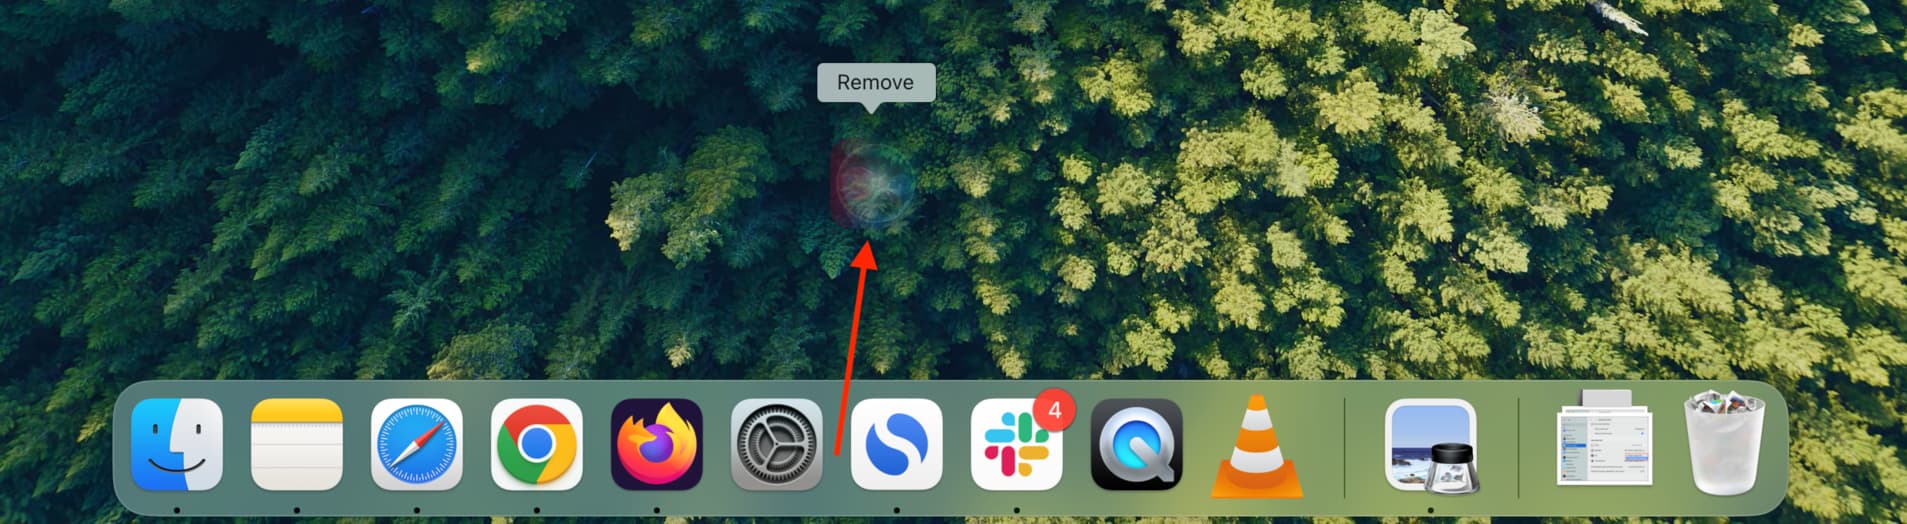 Remove Siri from Mac Dock